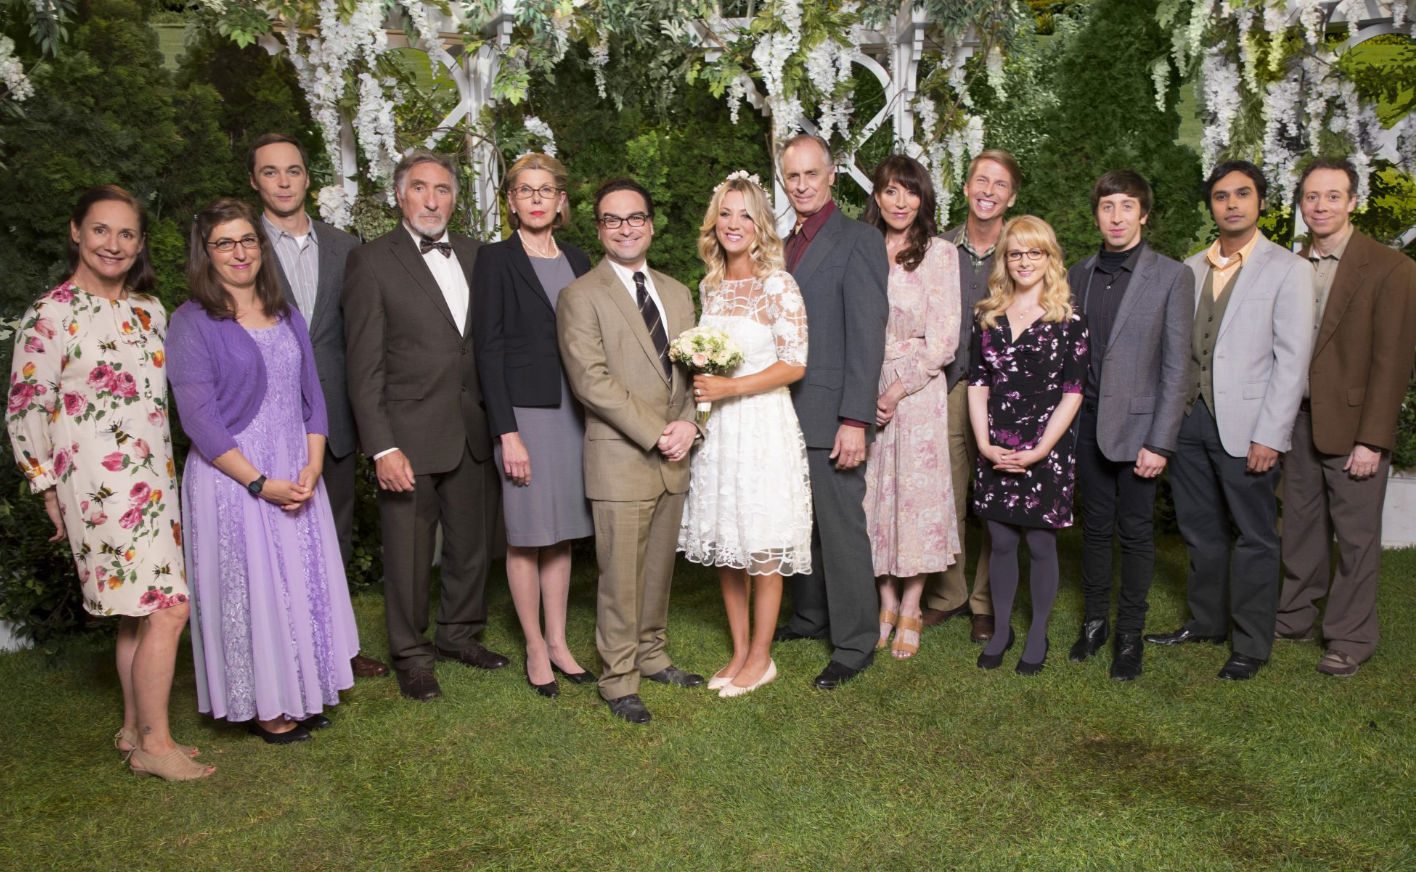 LOOK: Leonard and Penny’s ‘Big Bang Theory’ wedding